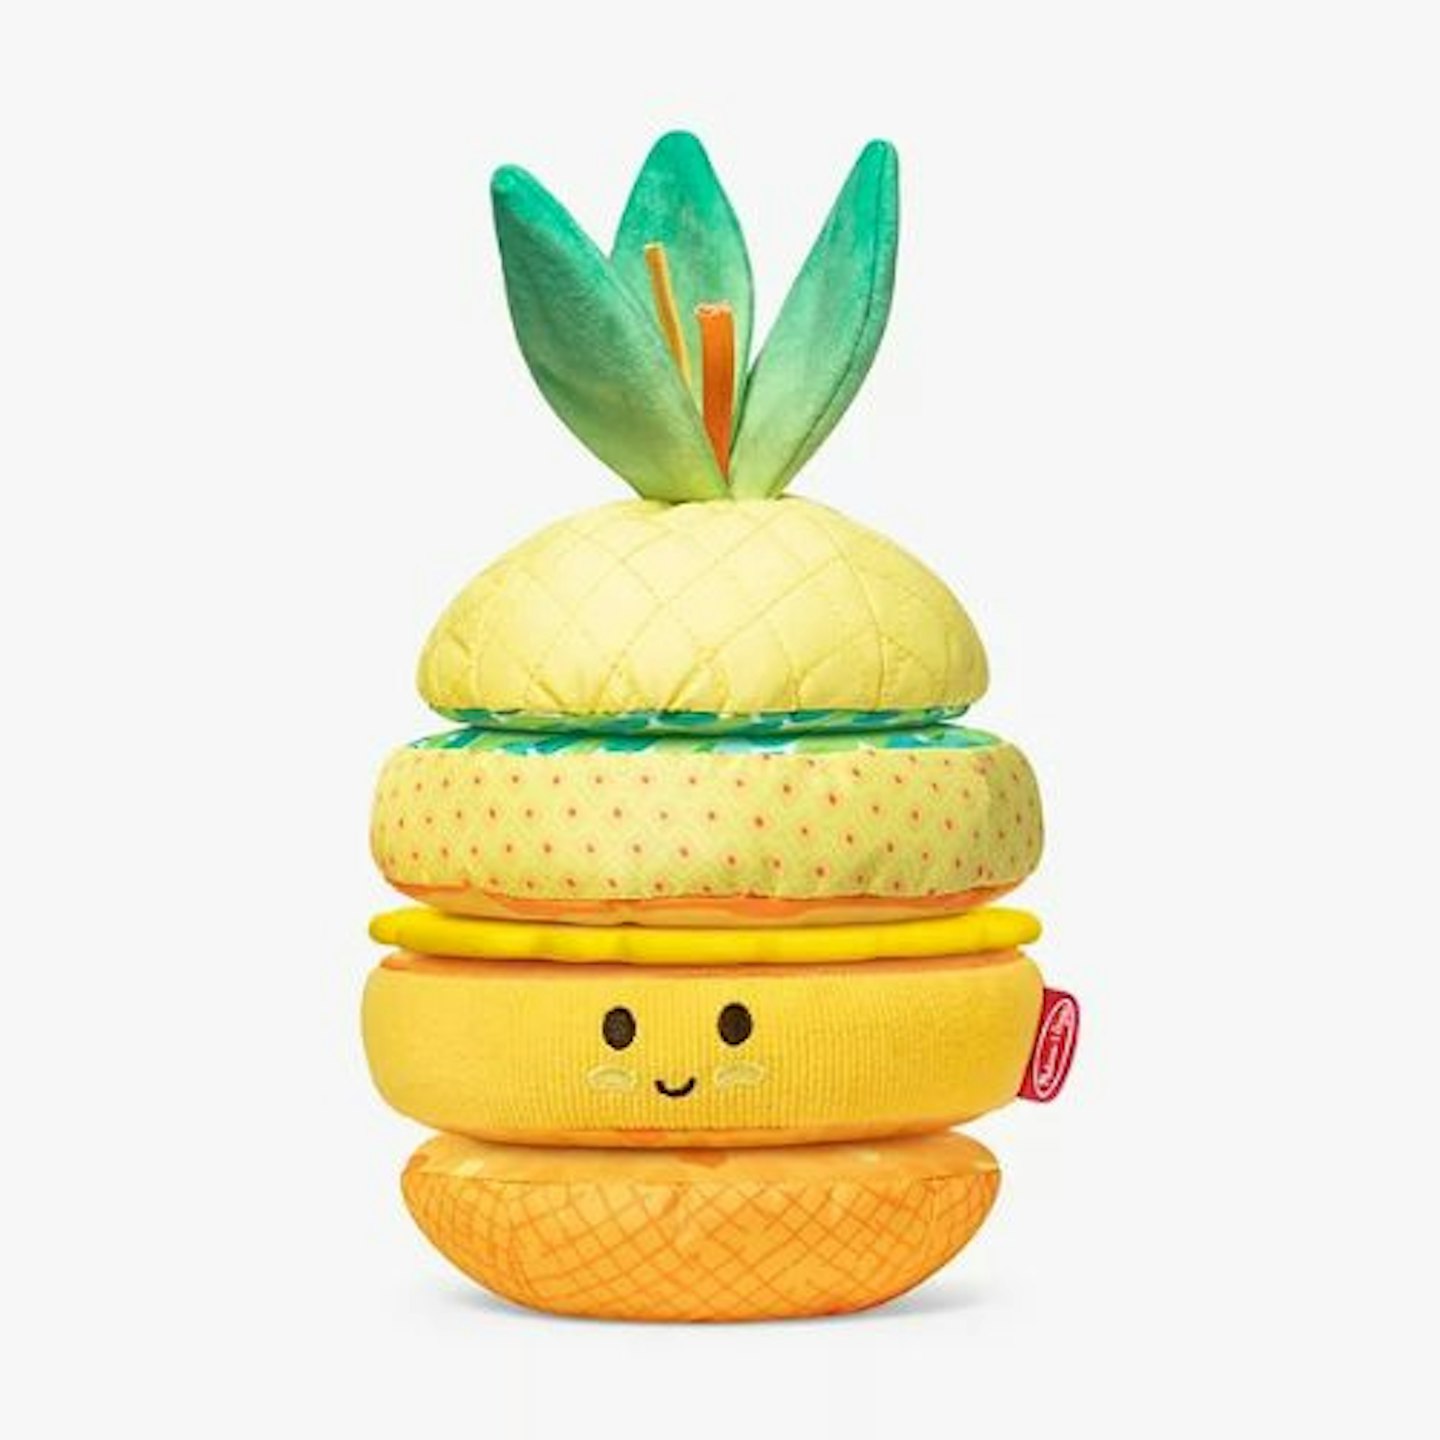 Best stacking toys Melissa & Doug Baby Multi- Sensory Soft Pineapple Stacker Toy